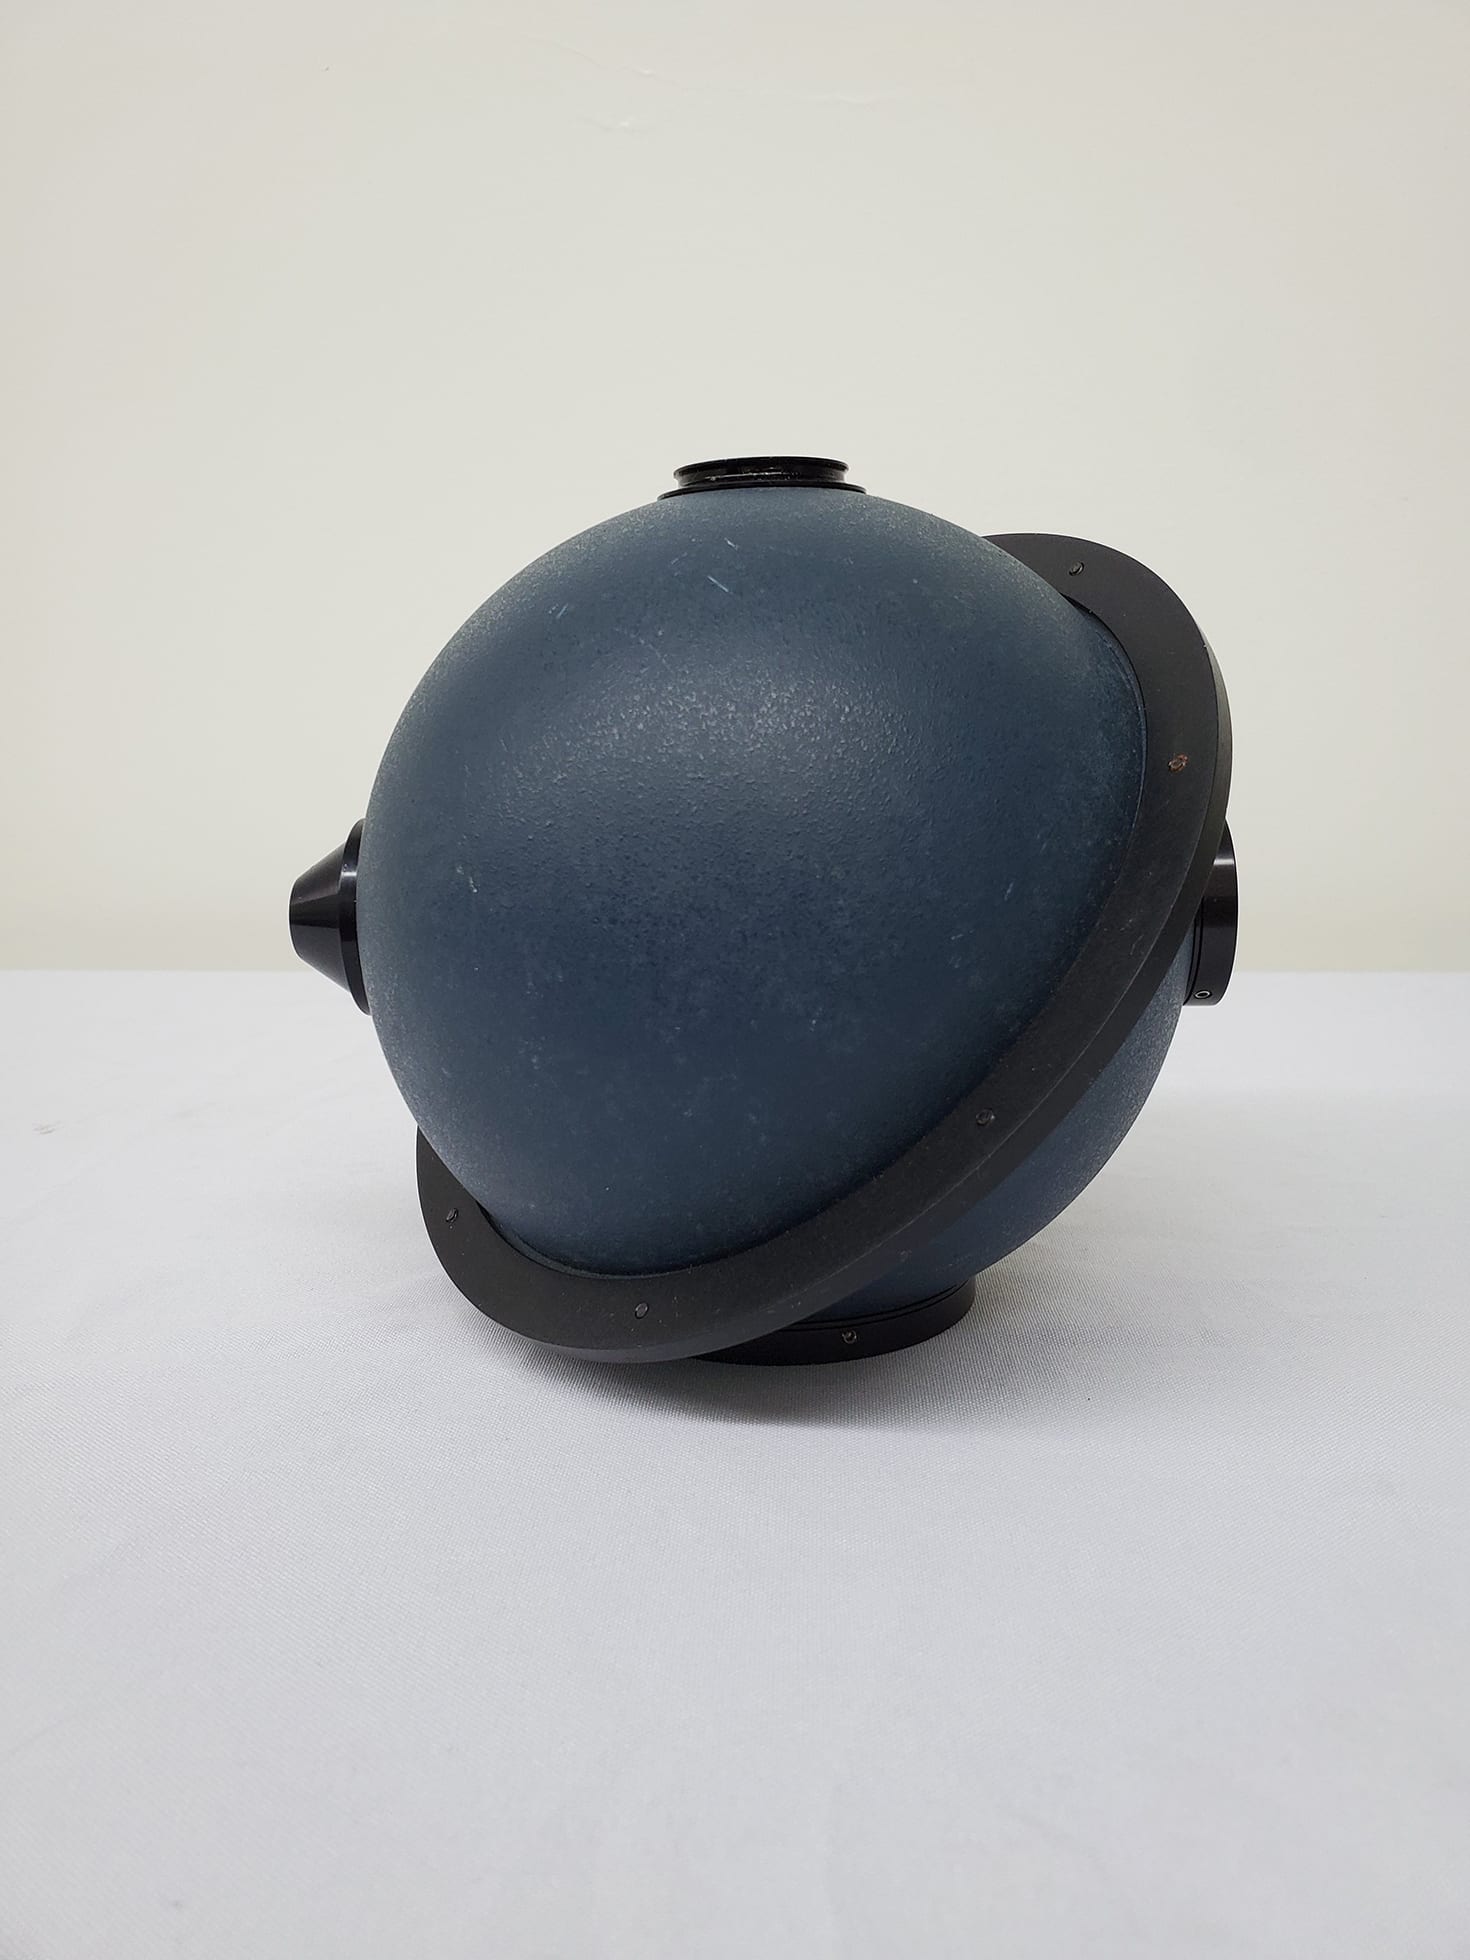 Buy Online Newport-819 C-Spectralon Collimated Beam Integrating Sphere-54578